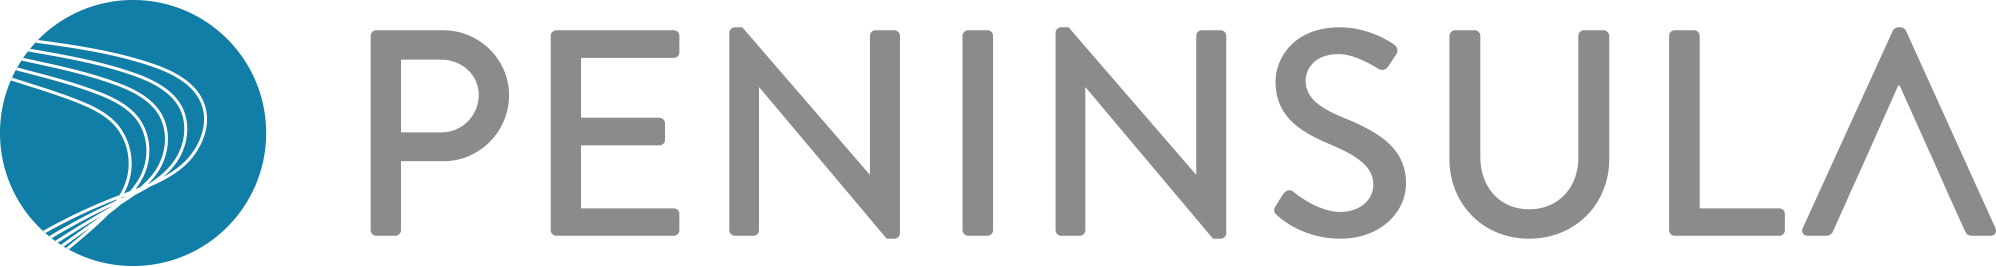 Peninsula Logo Main Version